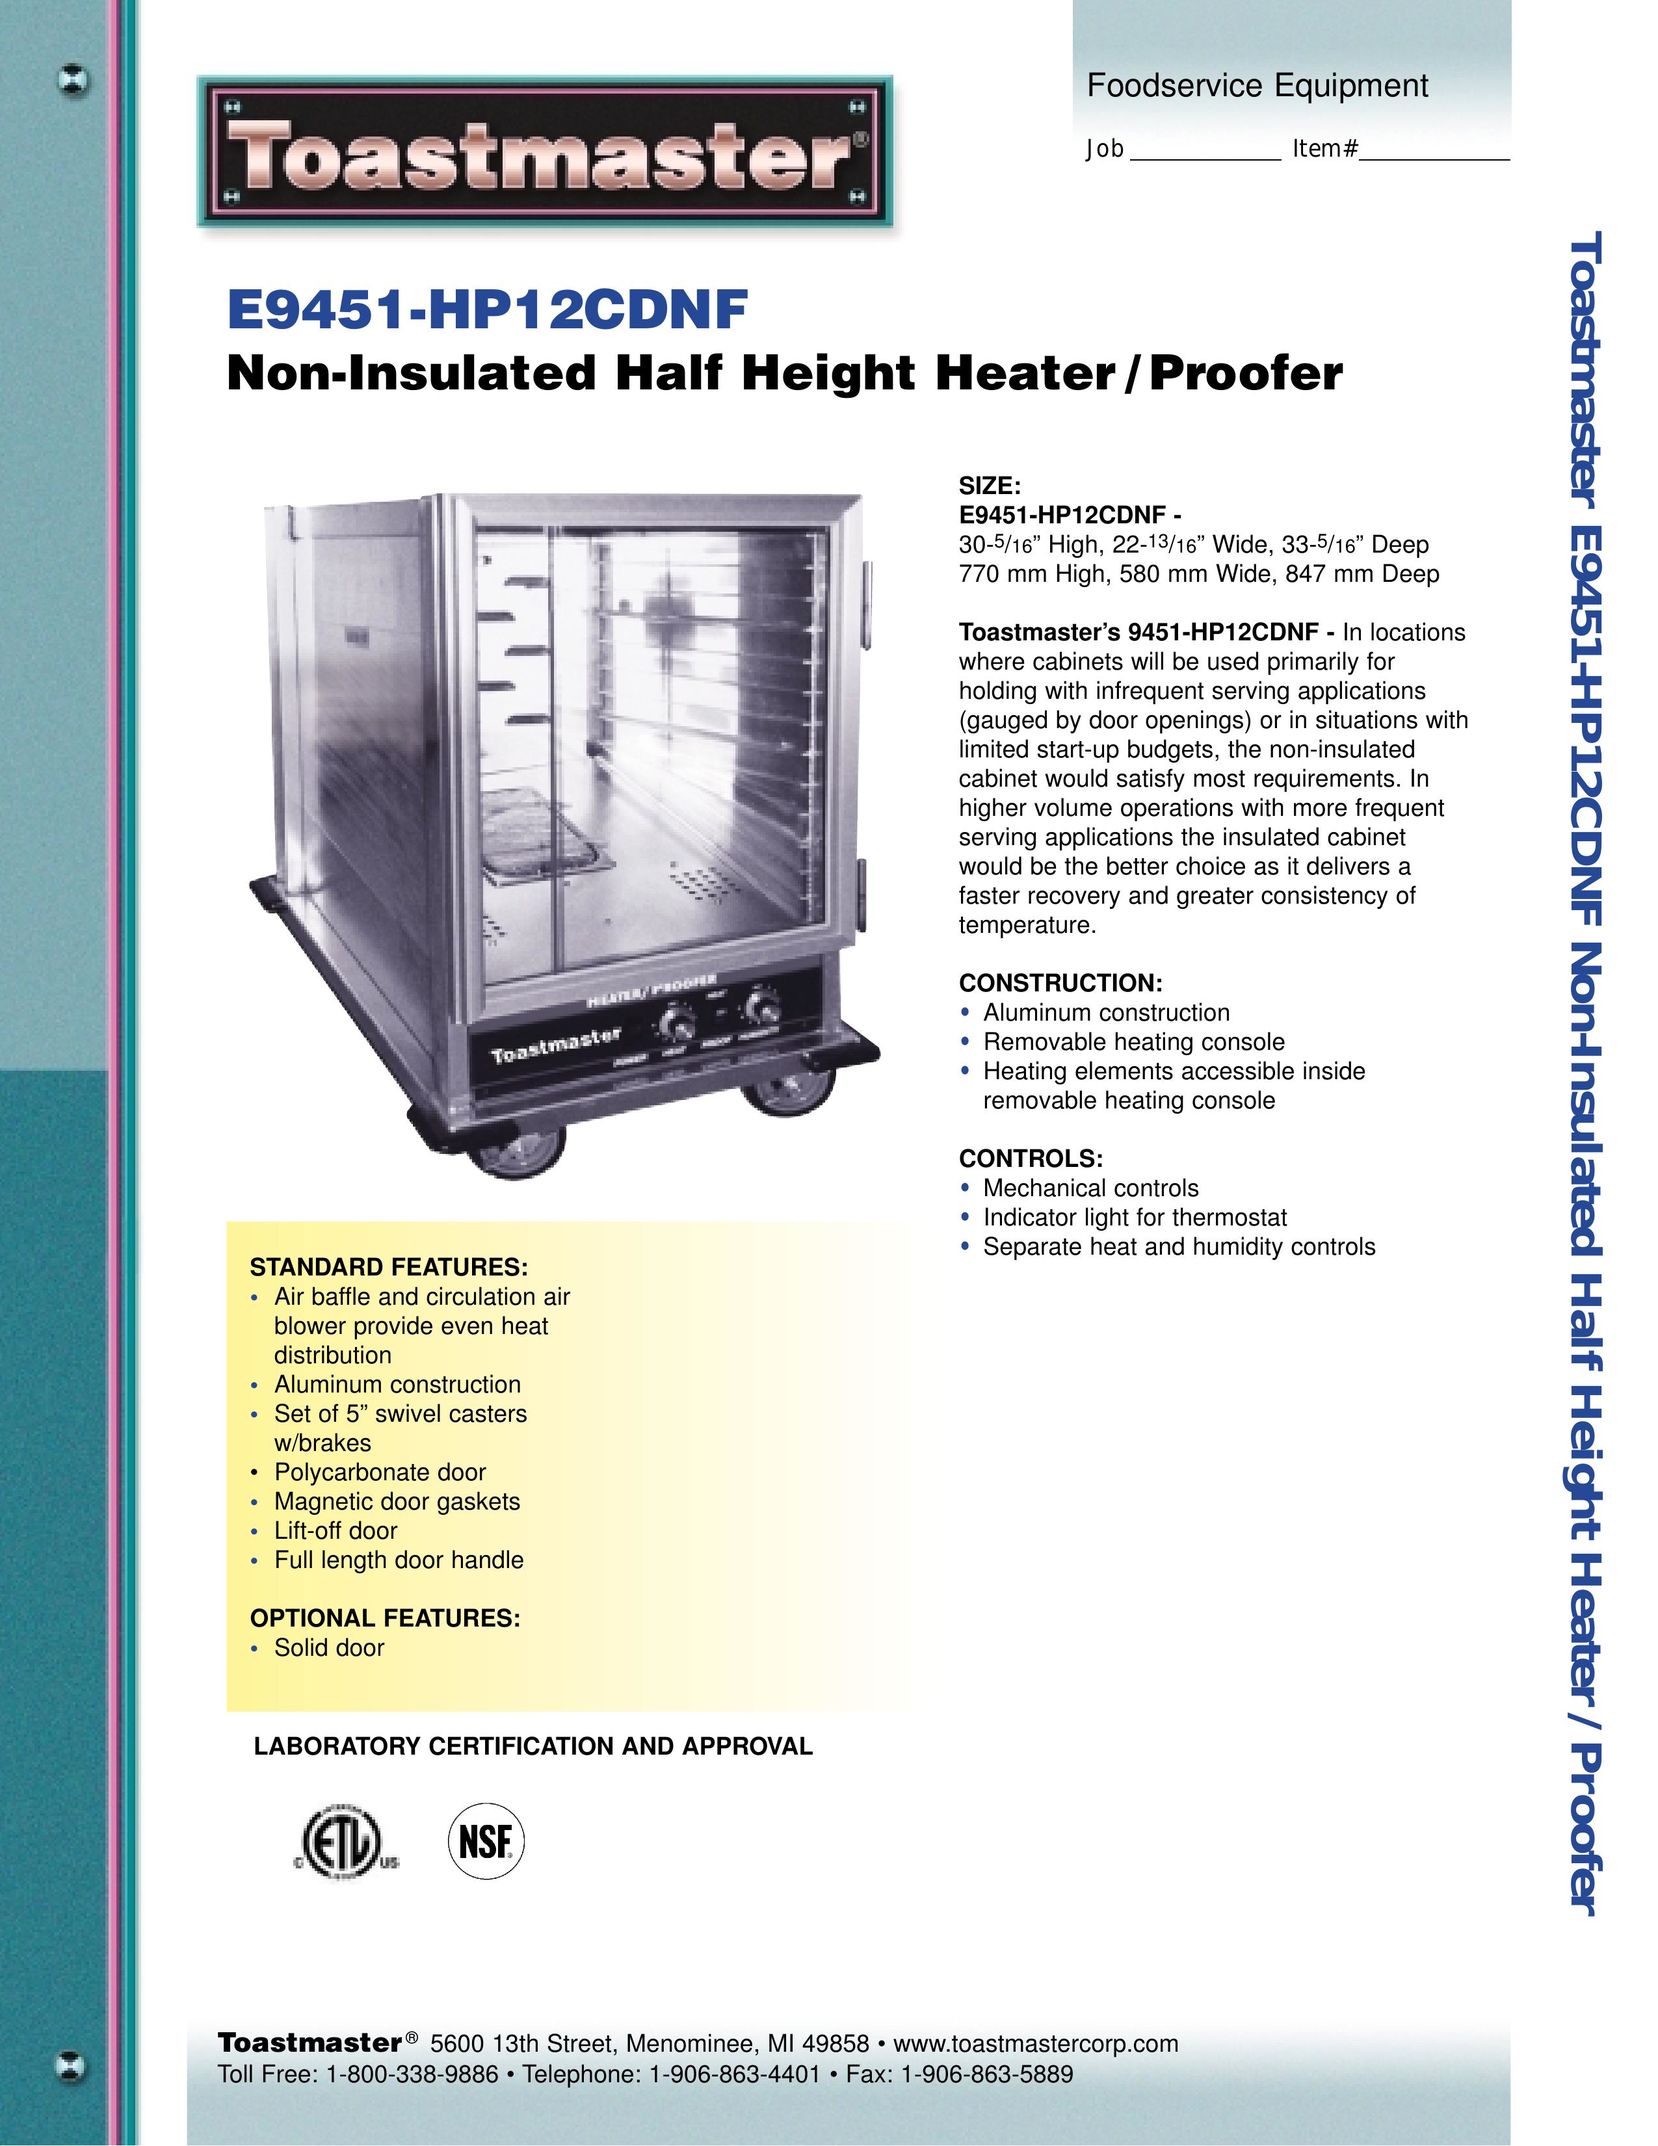 Toastmaster E9451-HP12CDNF Convection Oven User Manual